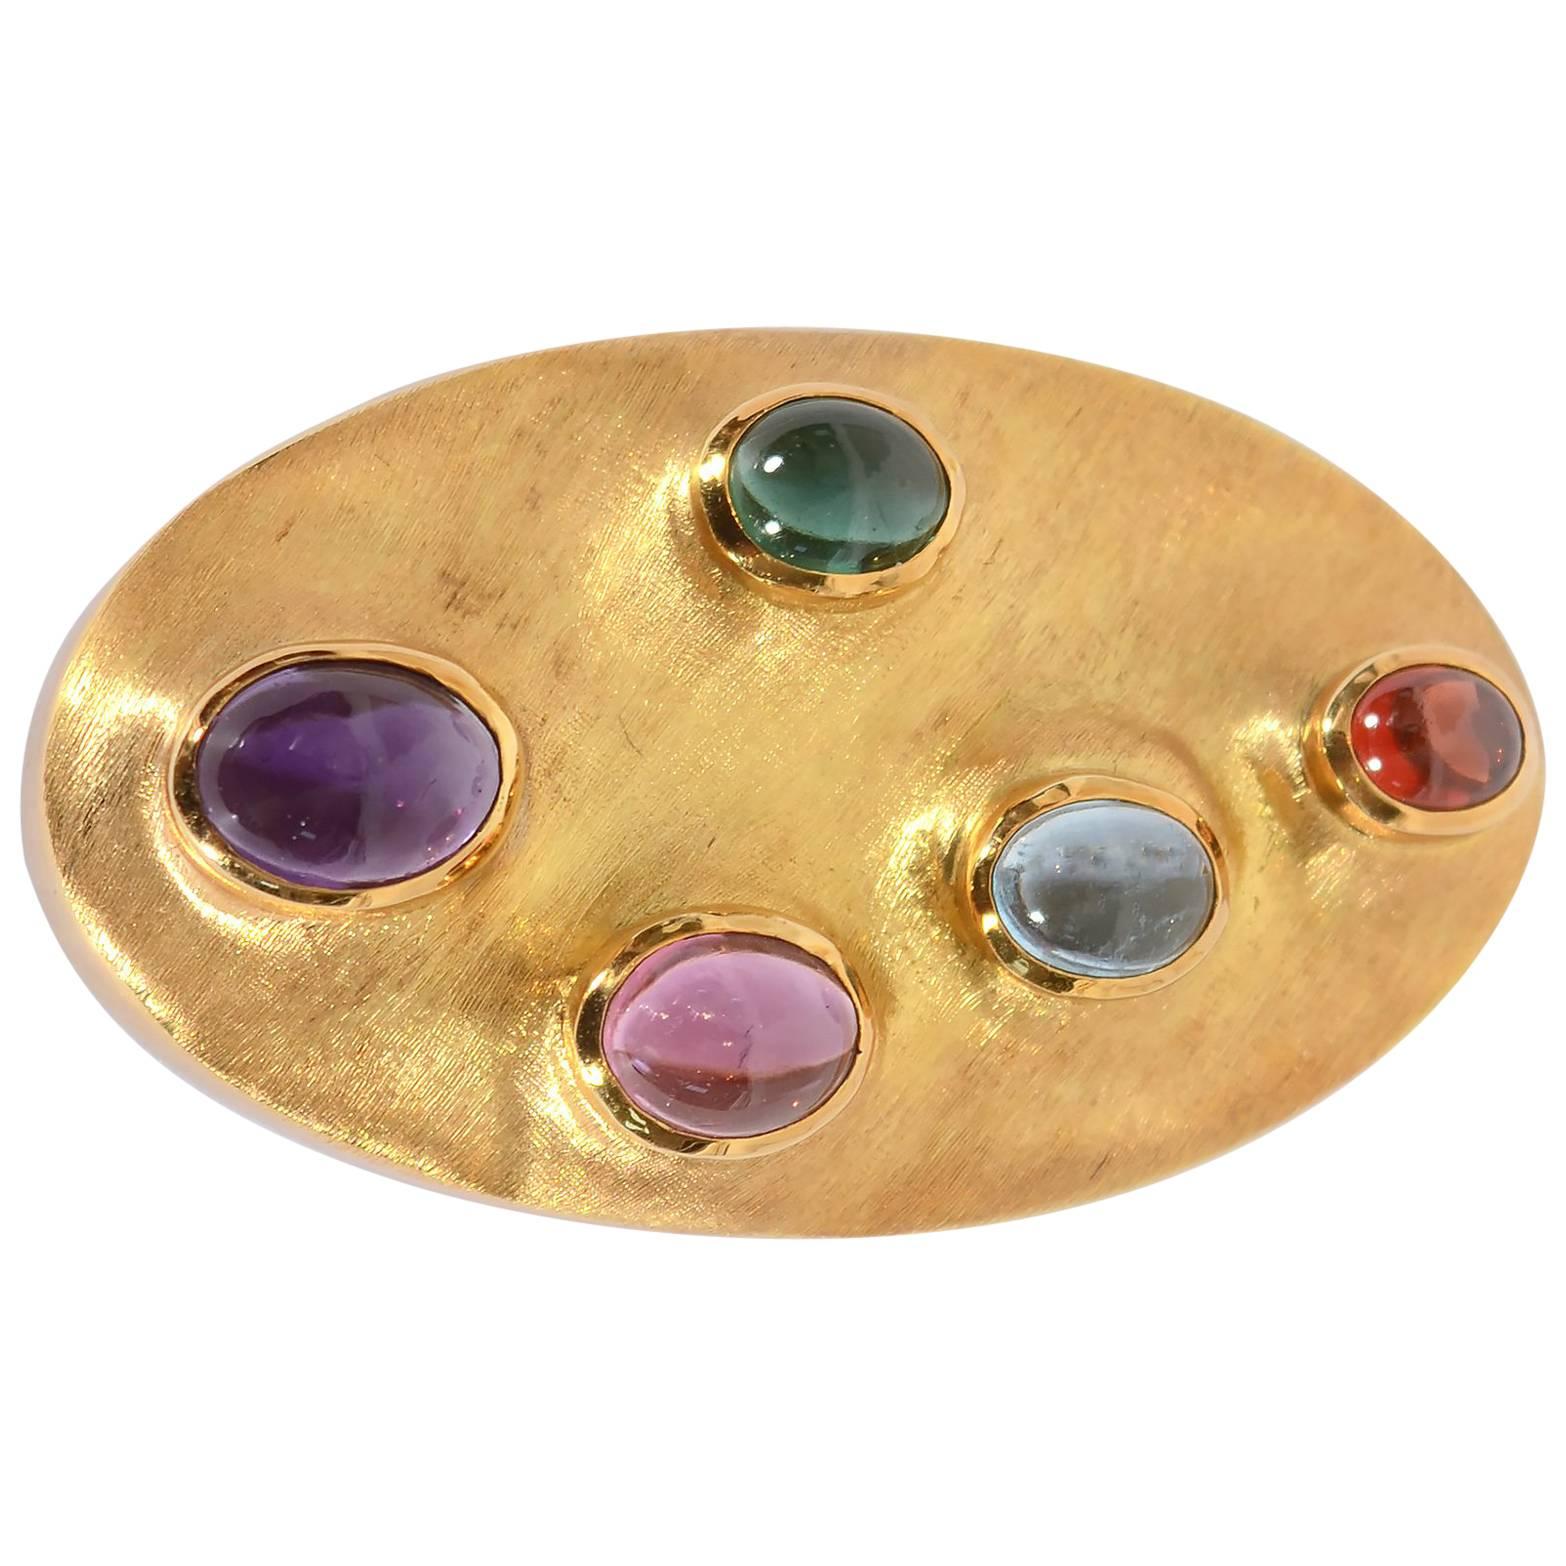 Burle Marx Oval Gemstone Gold Brooch